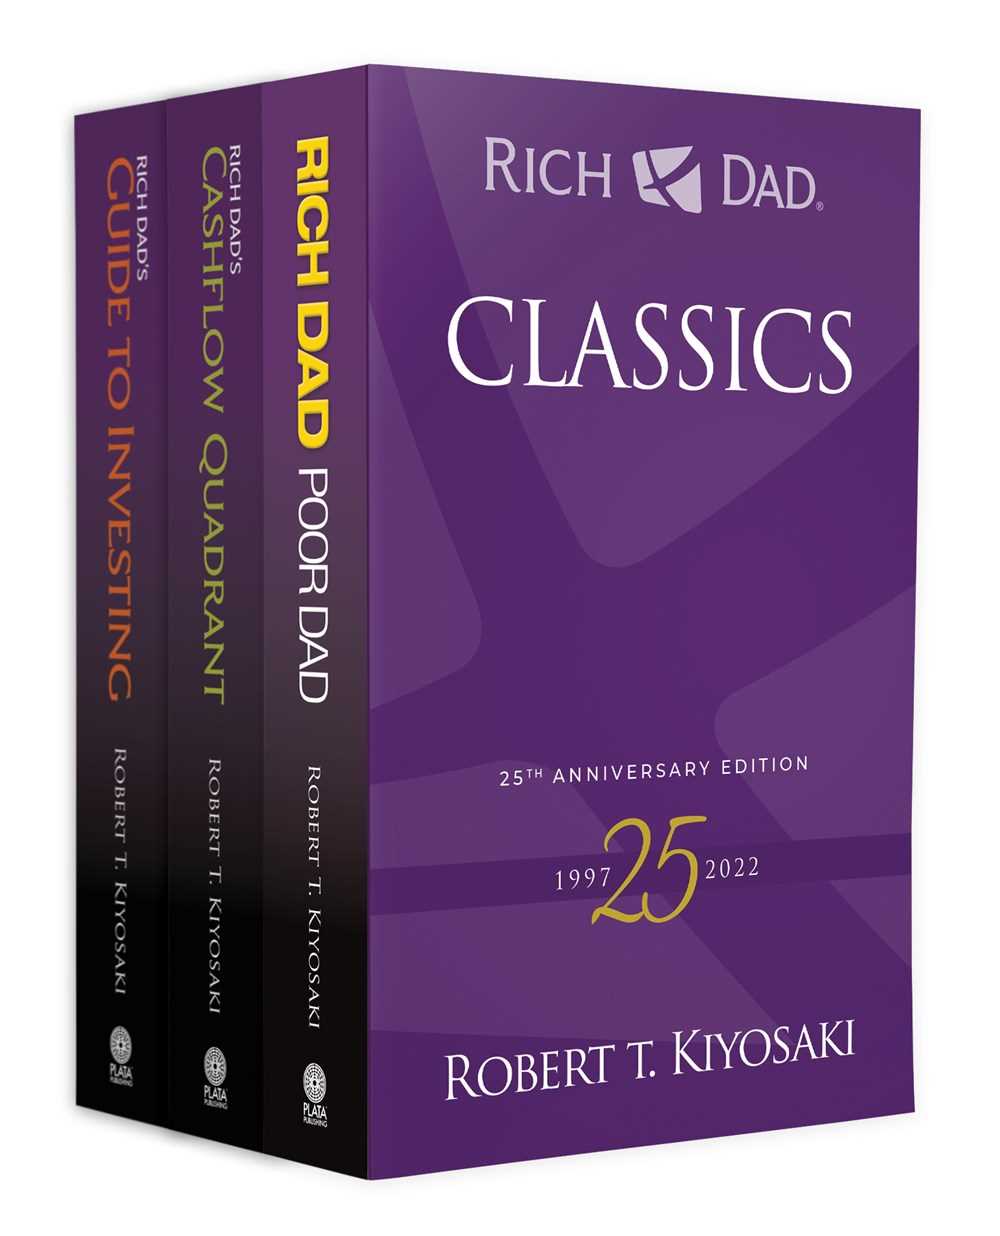 Rich Dad Classics Boxed Set (25th Anniversary Edition)